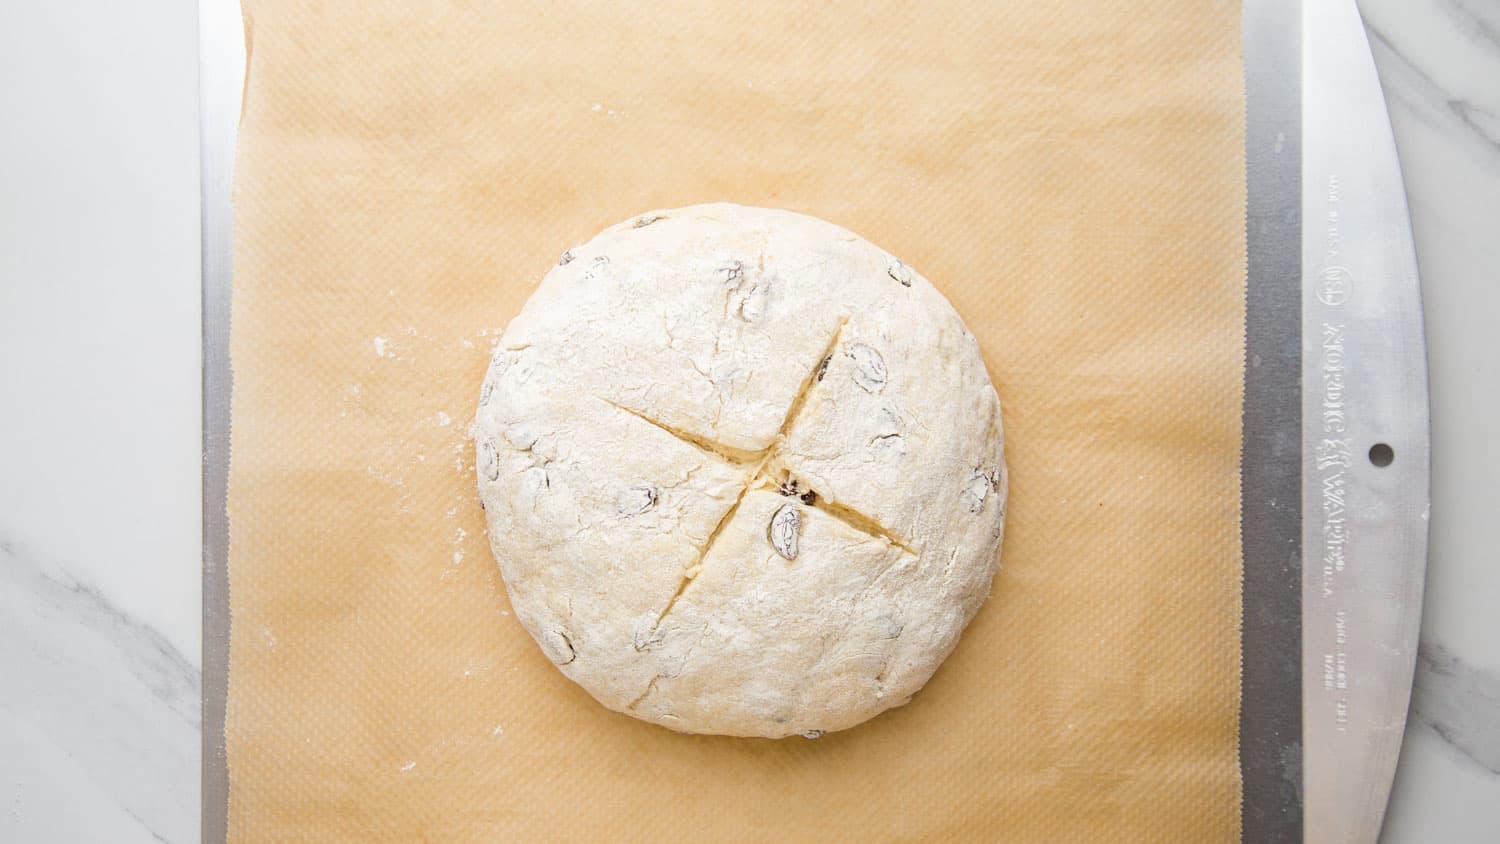 Shaped and scored irish soda bread dough ball placed on a baking sheet